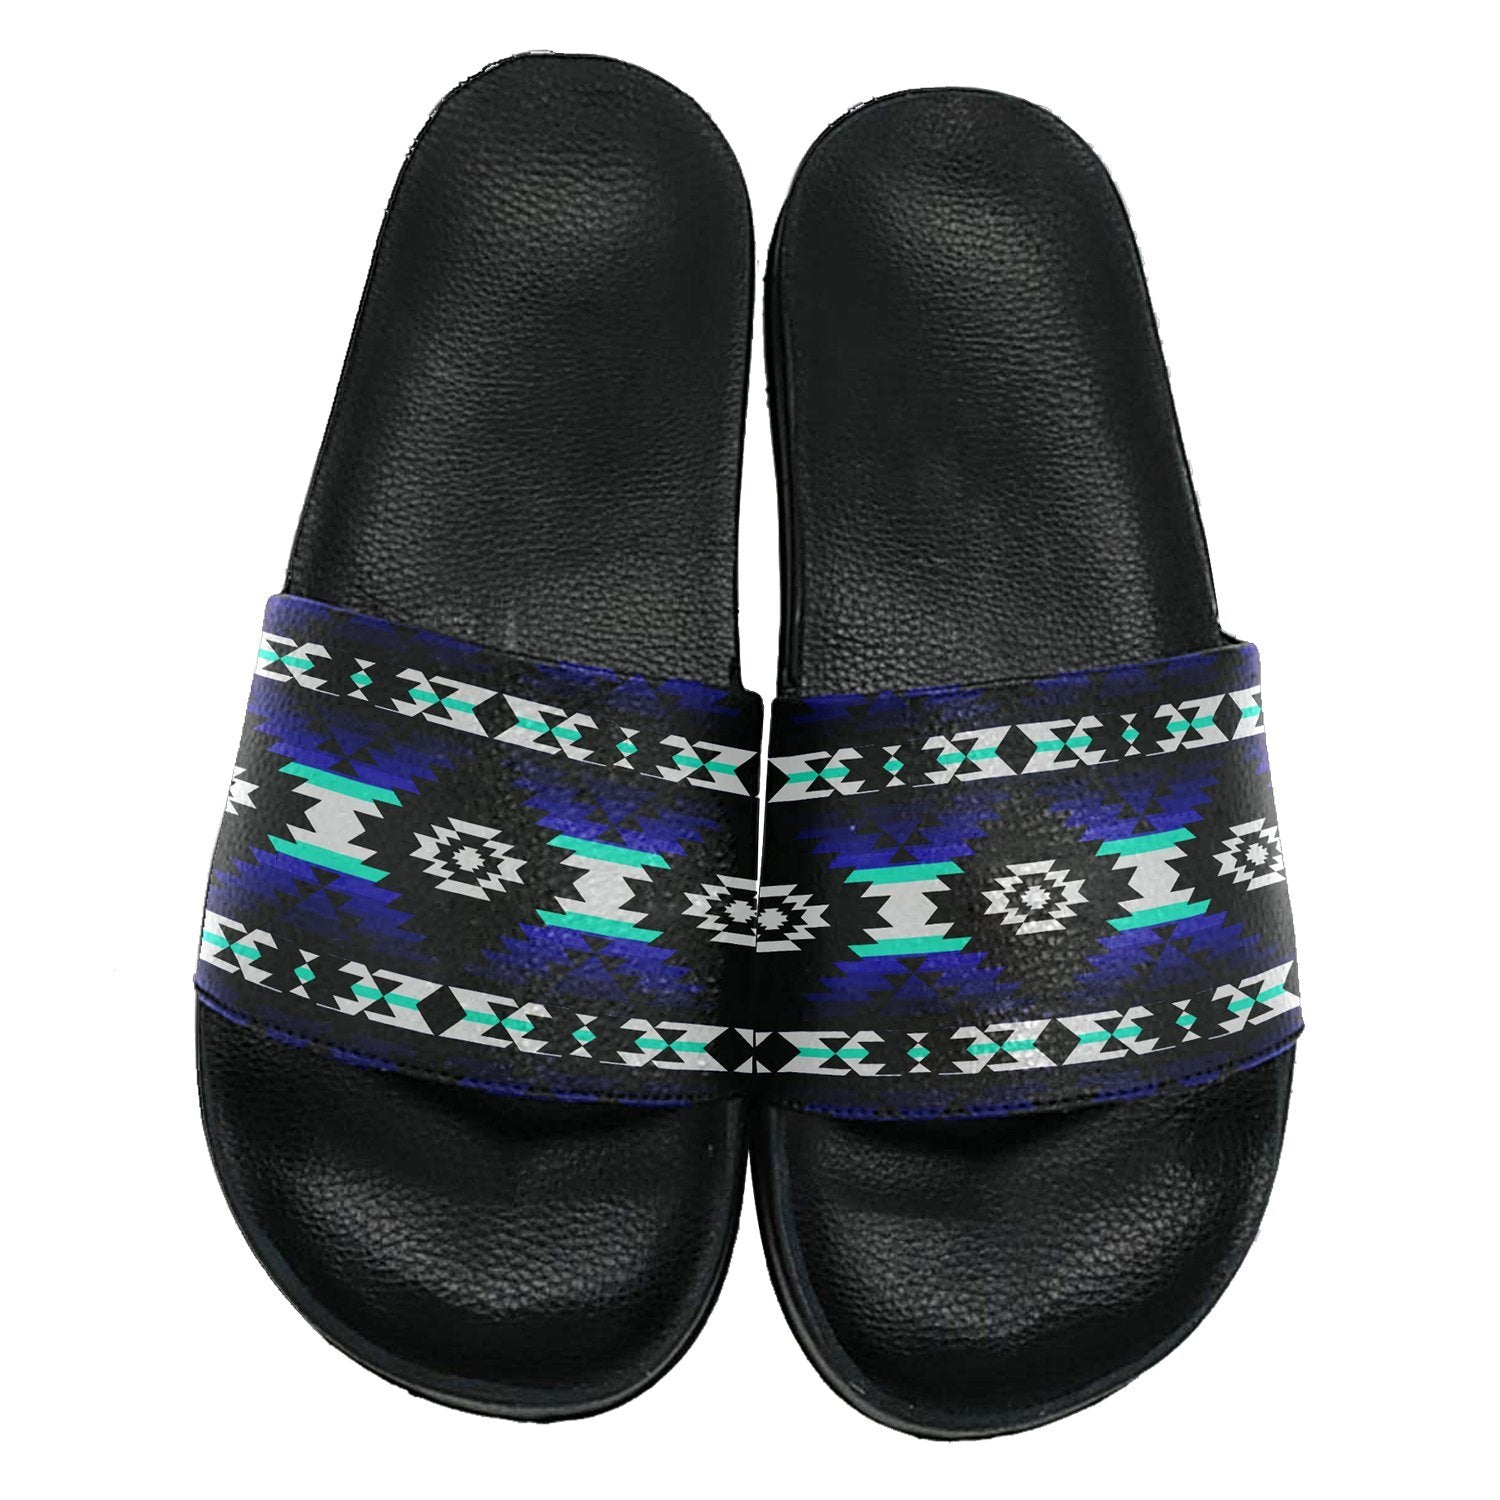 Cree Confederacy Midnight Slide Sandals 49 Dzine 